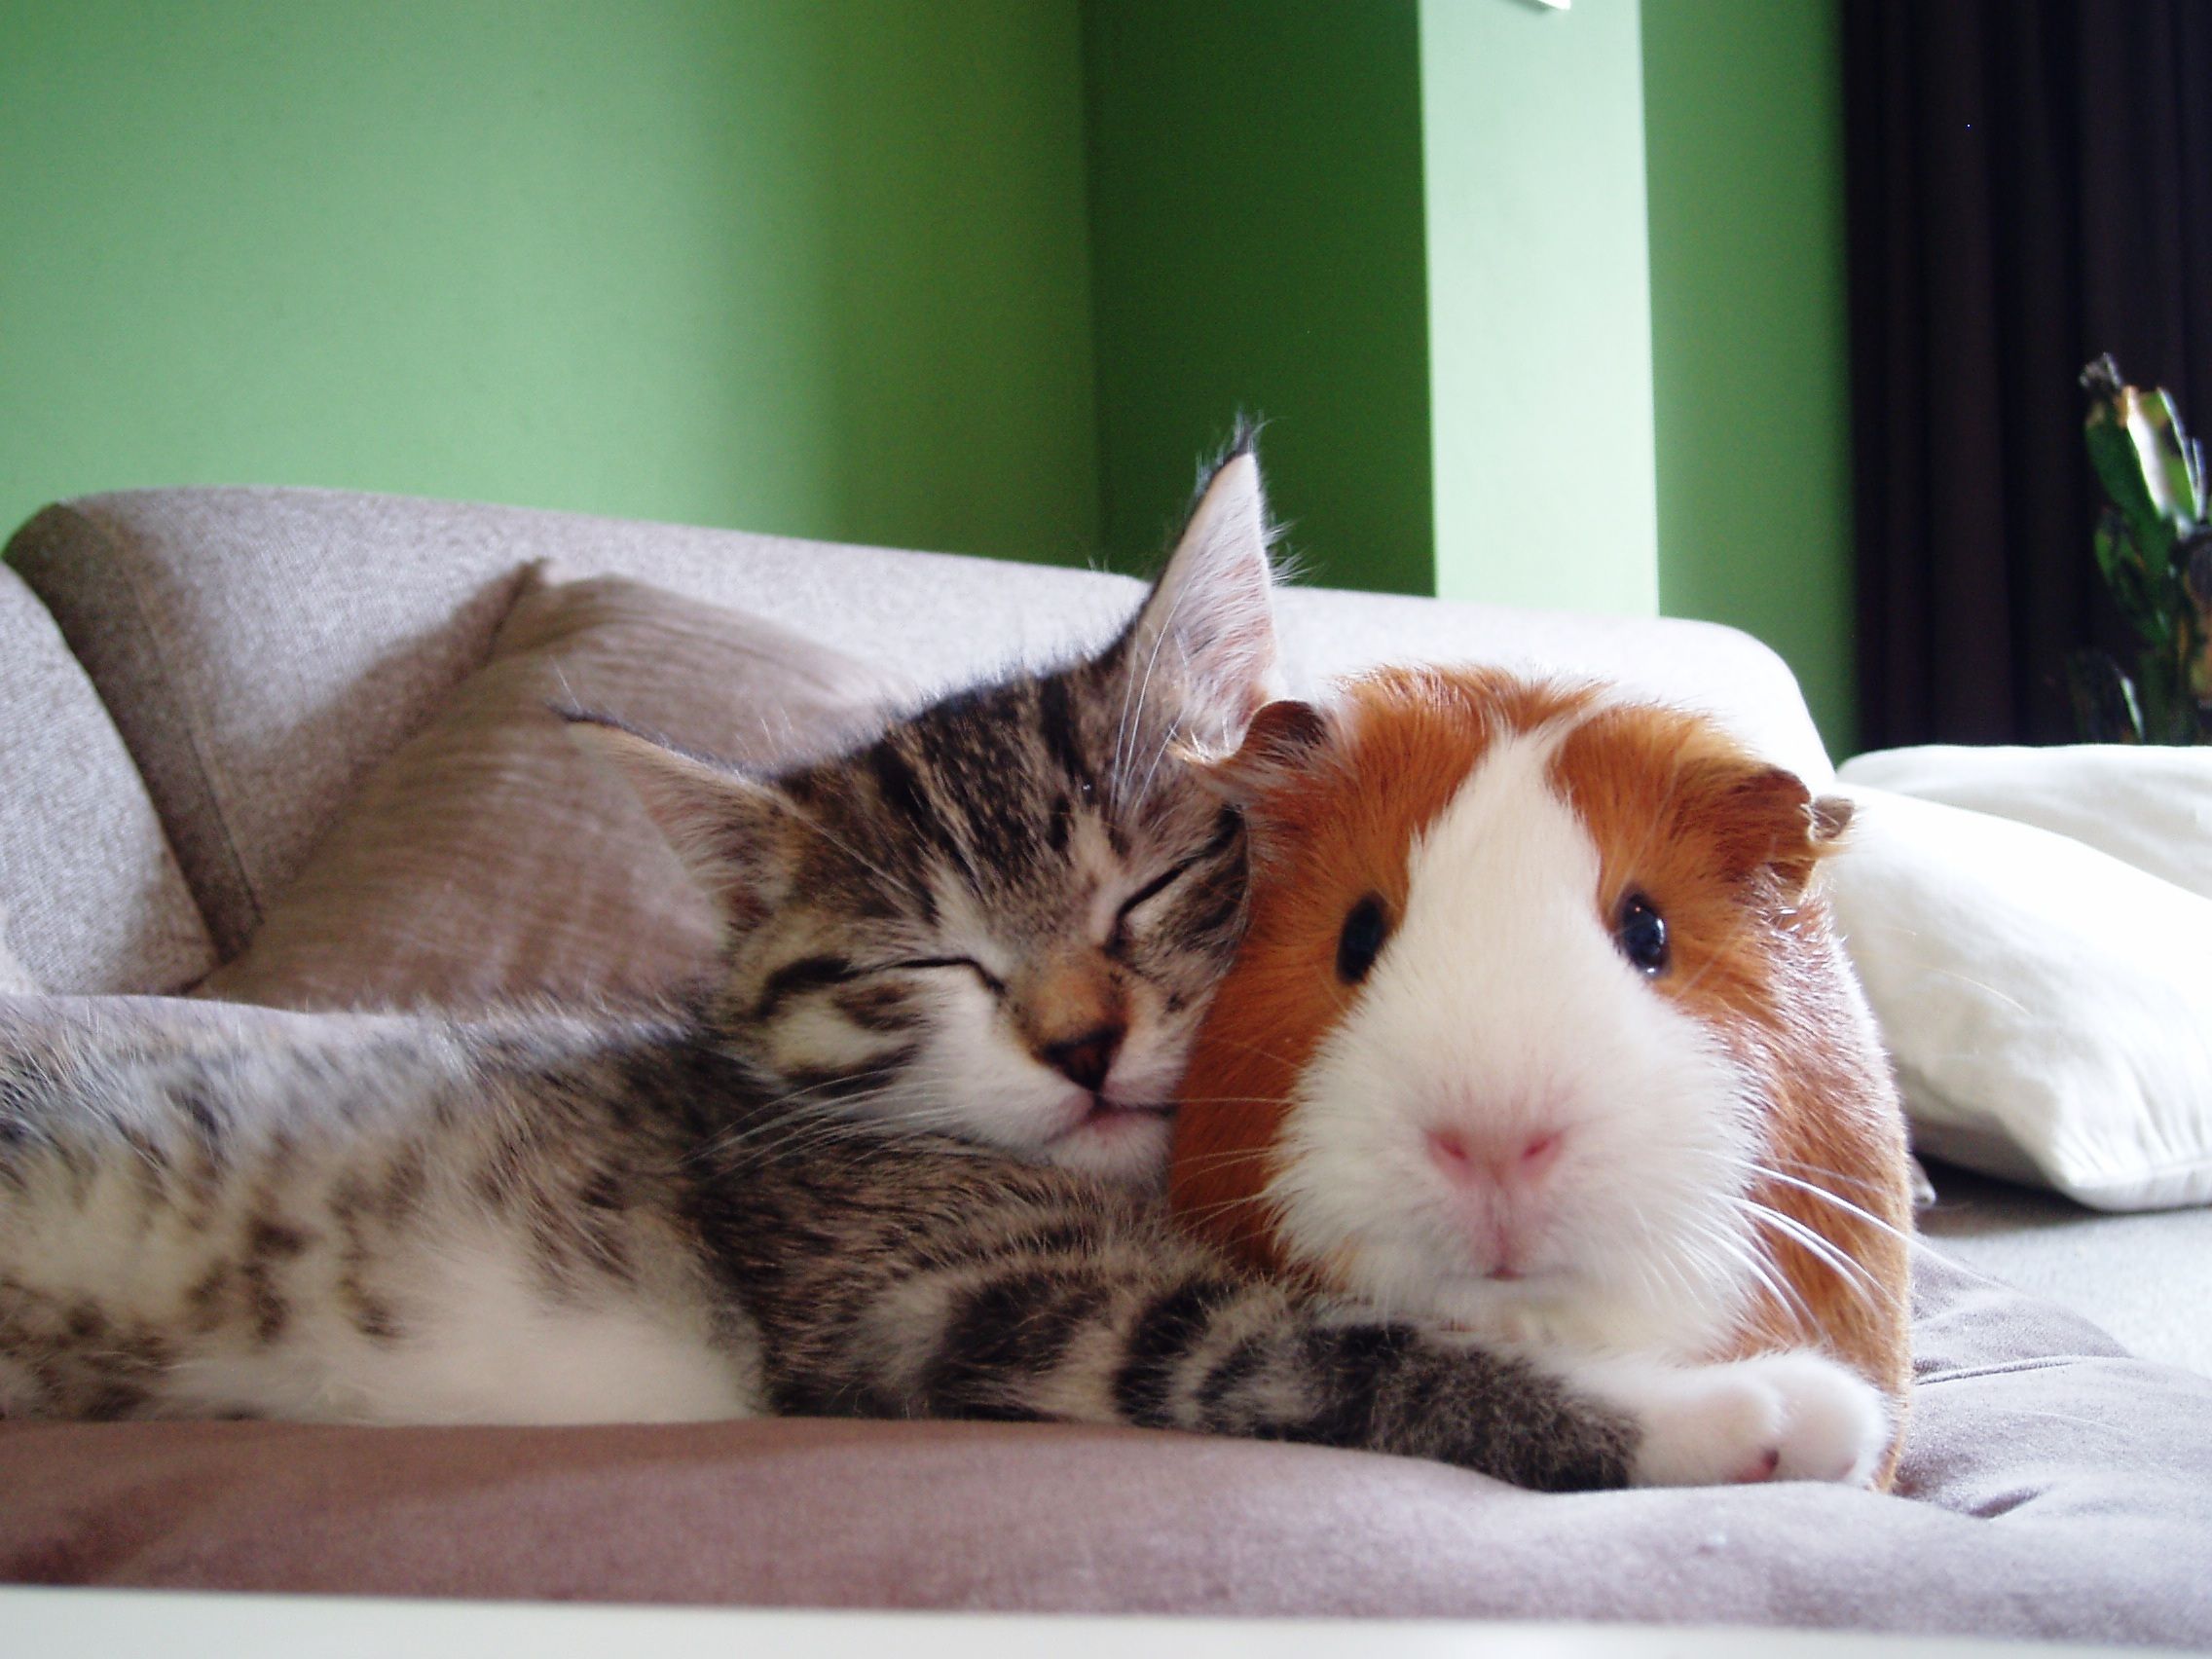 Gunie Pig and cat